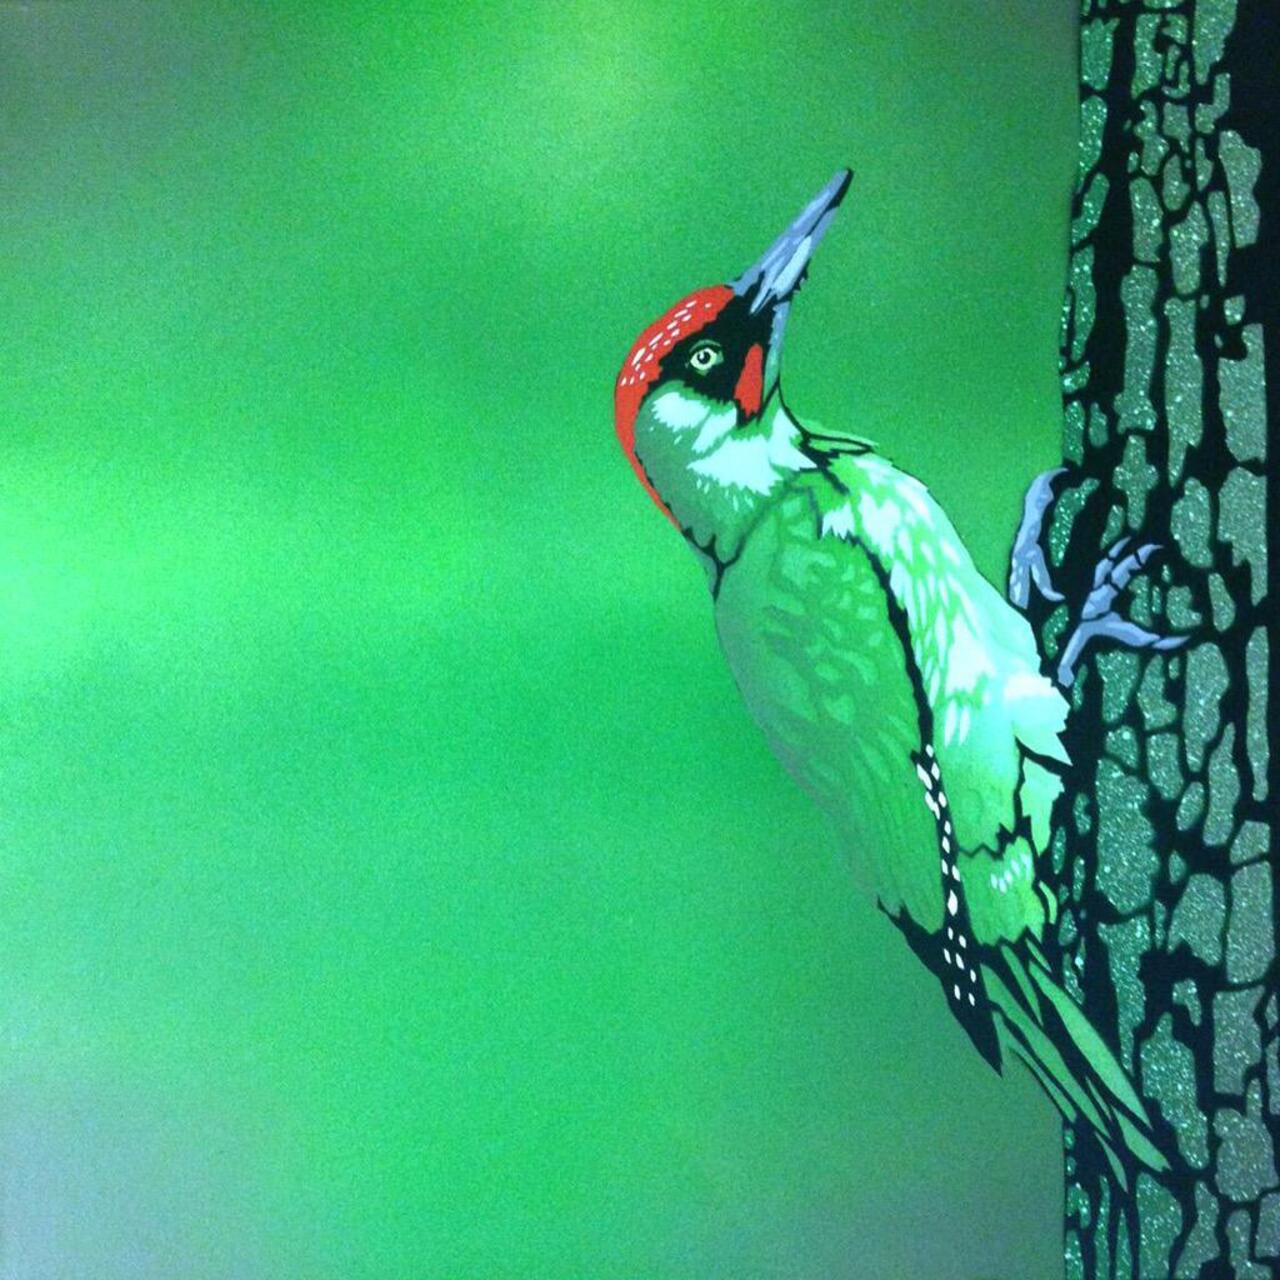 i_bee_w -"Green woodpecker" 50cm x 50cm canvas #i_bee_w #stencil #streetart #graffiti #woodpecker http://t.co/b841ztCDfK